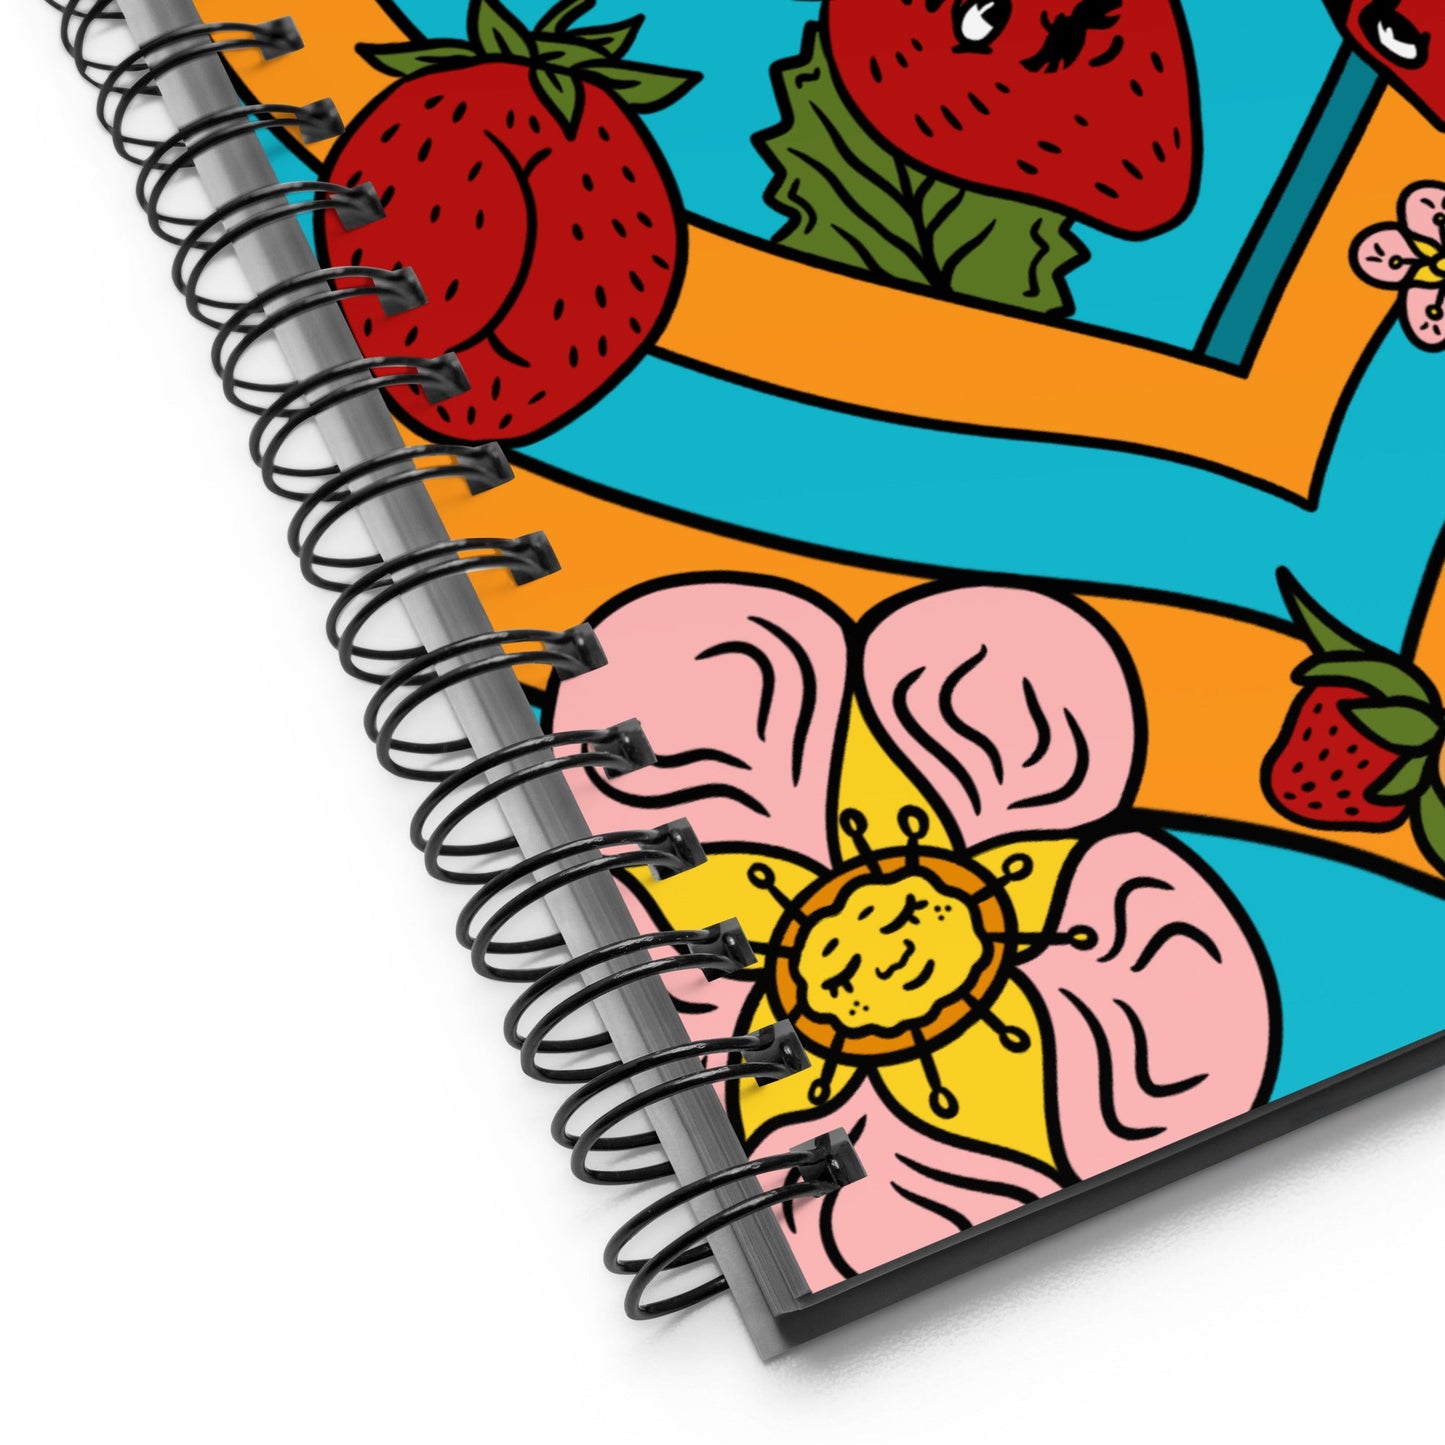 Groovy Strawbooties Spiral notebook - Cheeky Art Studio-journal-Notebook-strawberry